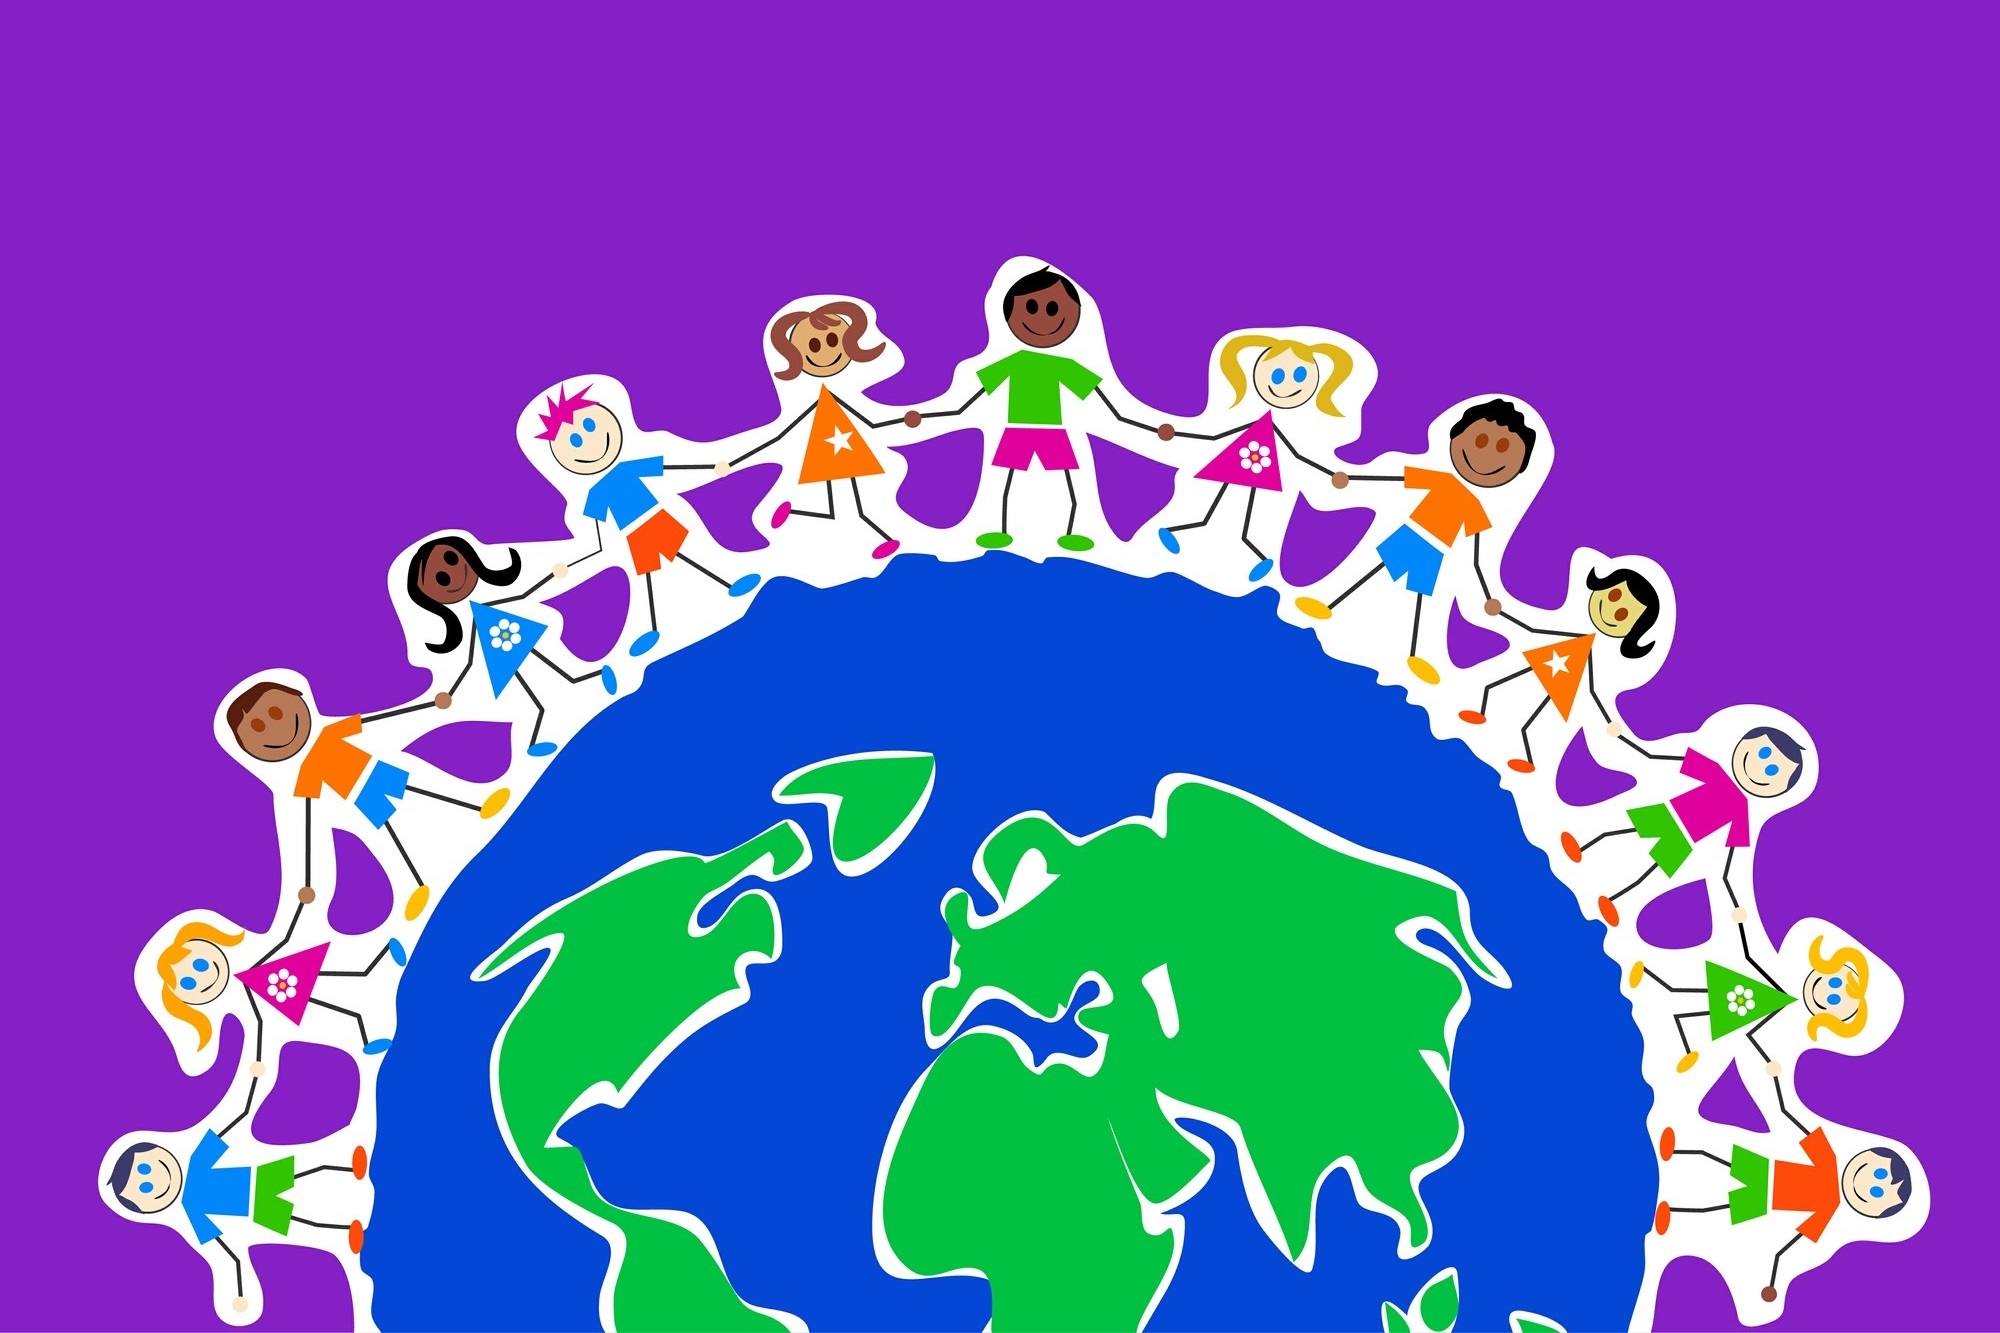 An illustration of children holding hands across the world